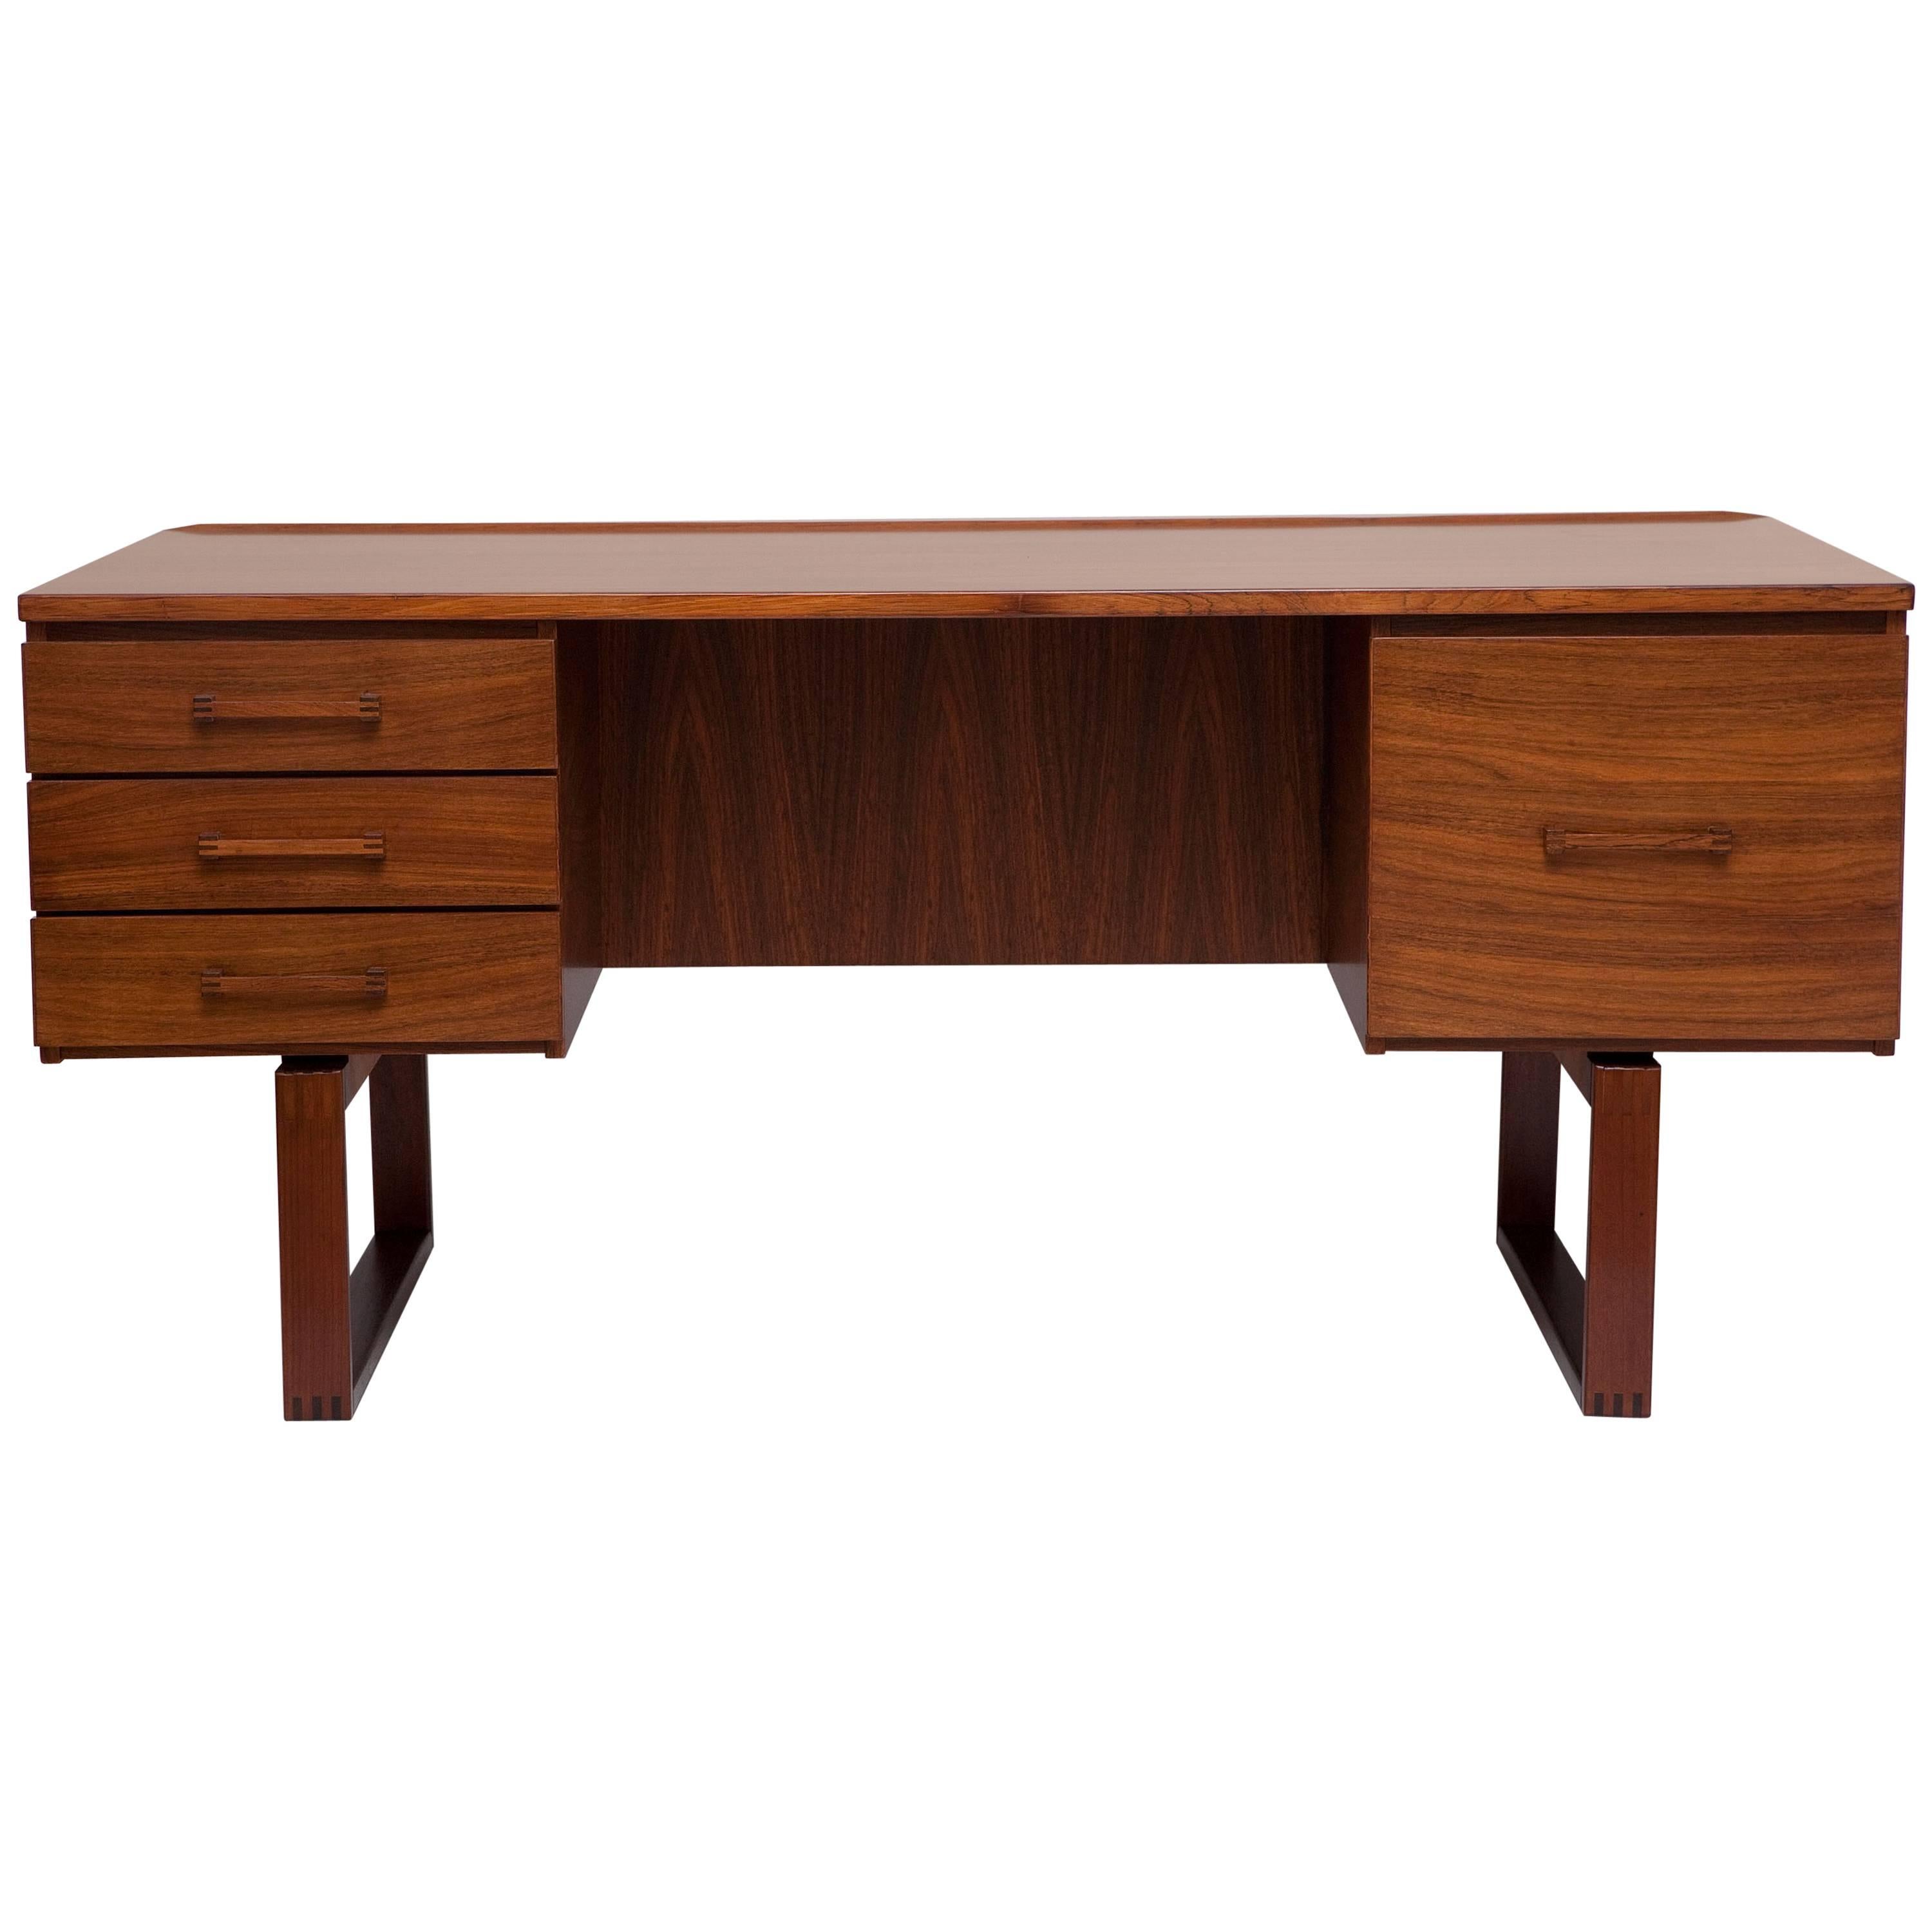 Brazilian Rosewood Desk by Henning Jensen and Torben Valeur